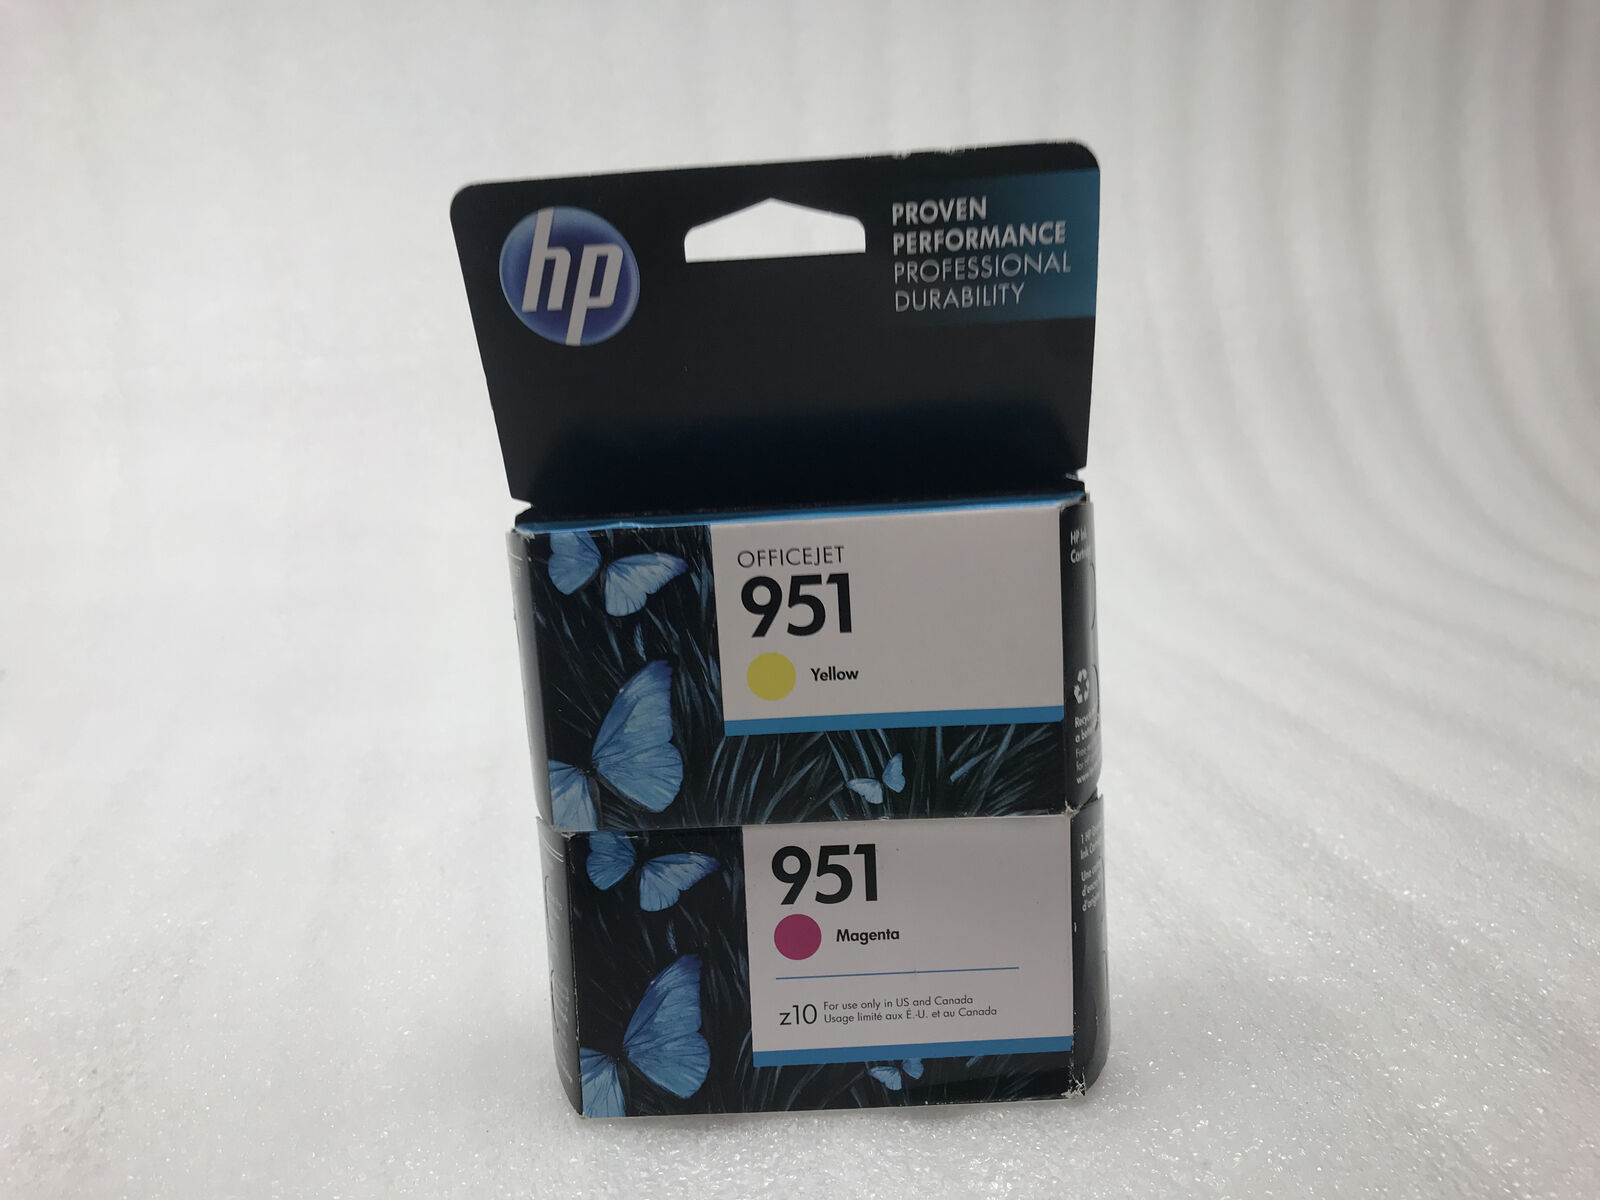 Set x2 Genuine HP OfficeJet 951 Yellow/Magenta New Sealed